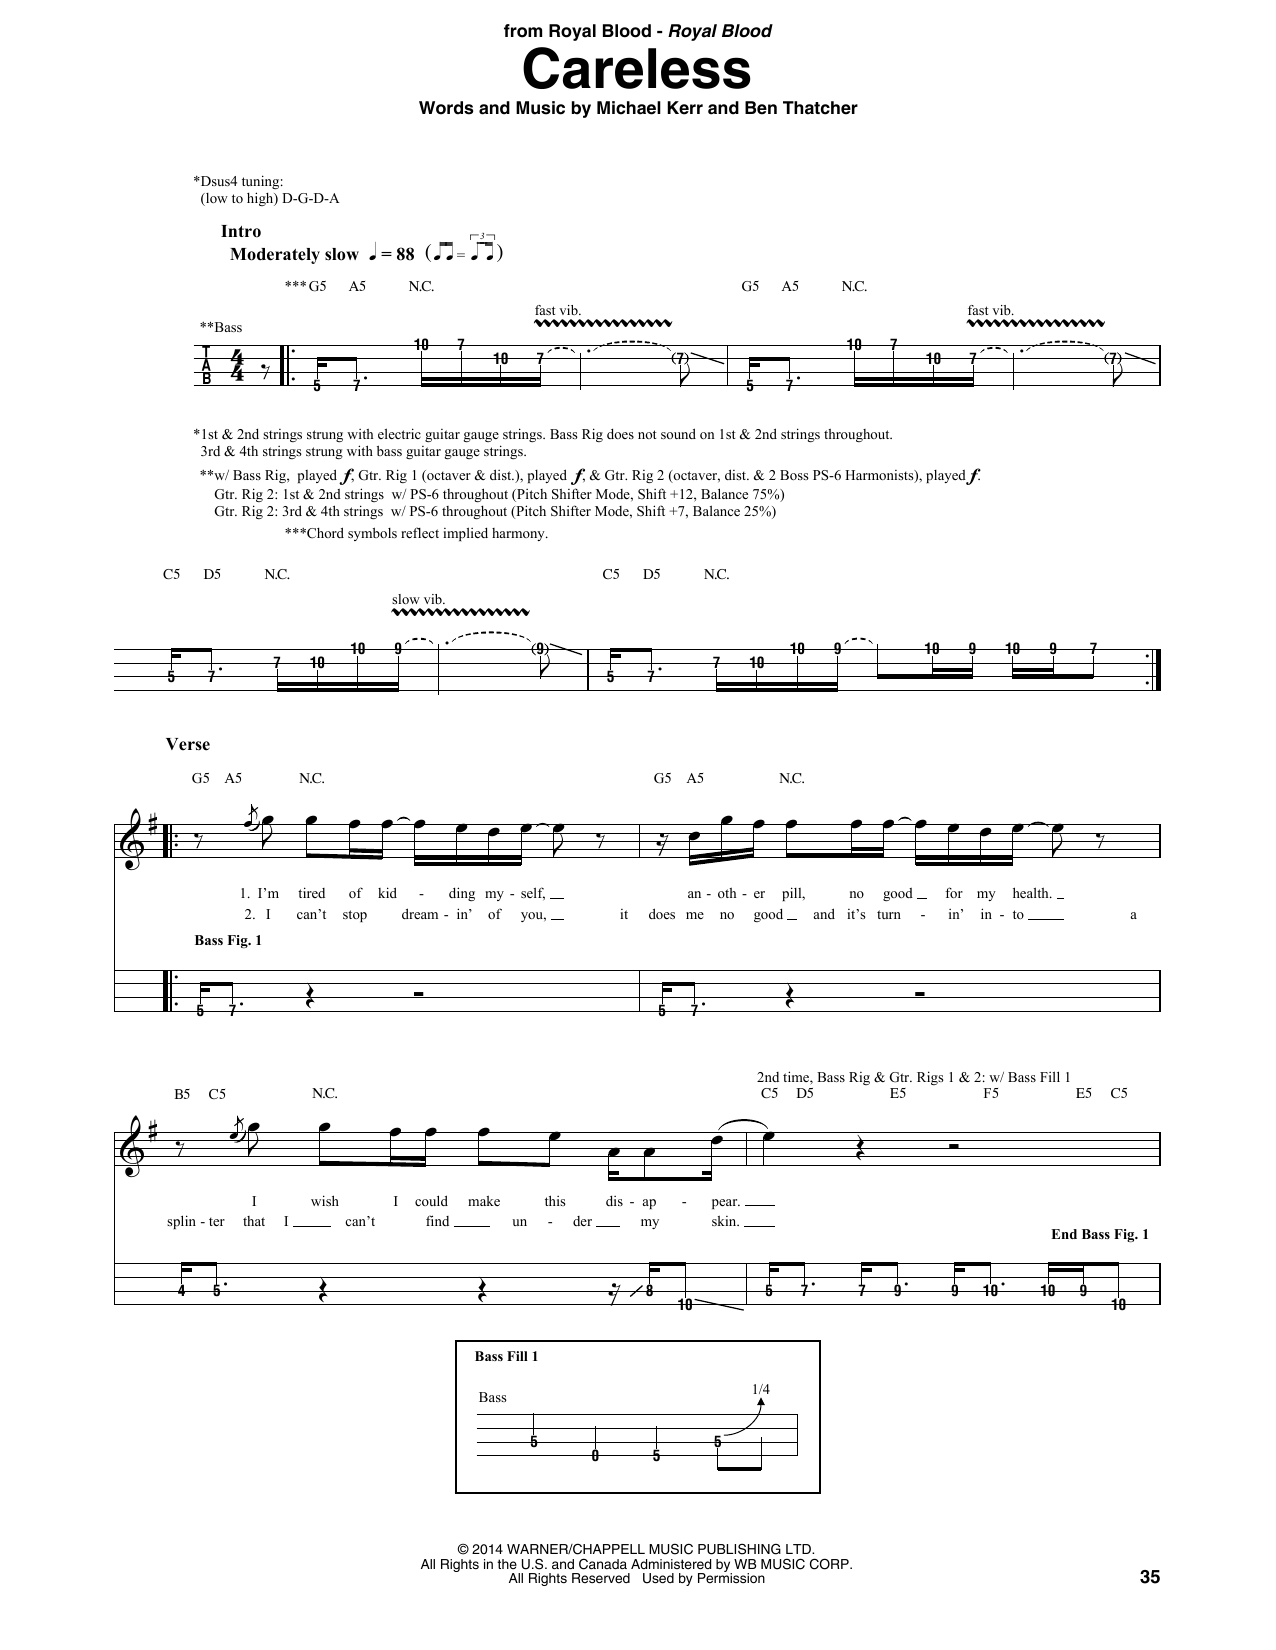 Royal Blood Careless Sheet Music Notes & Chords for Bass Guitar Tab - Download or Print PDF